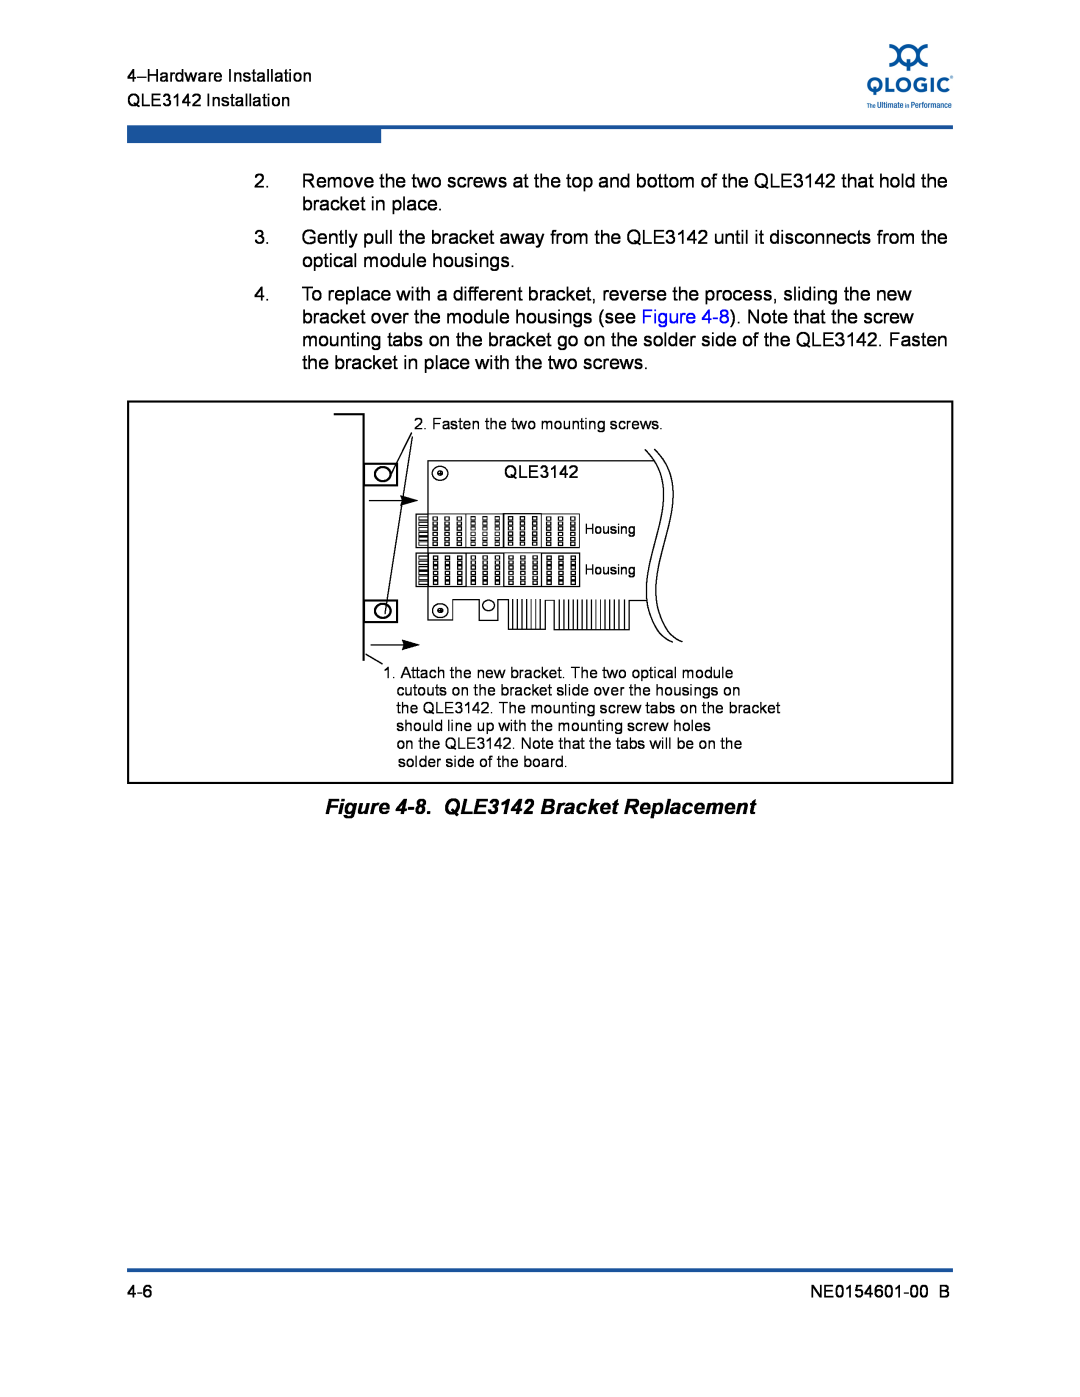 Q-Logic 3100, 3000 manual 8. QLE3142 Bracket Replacement 